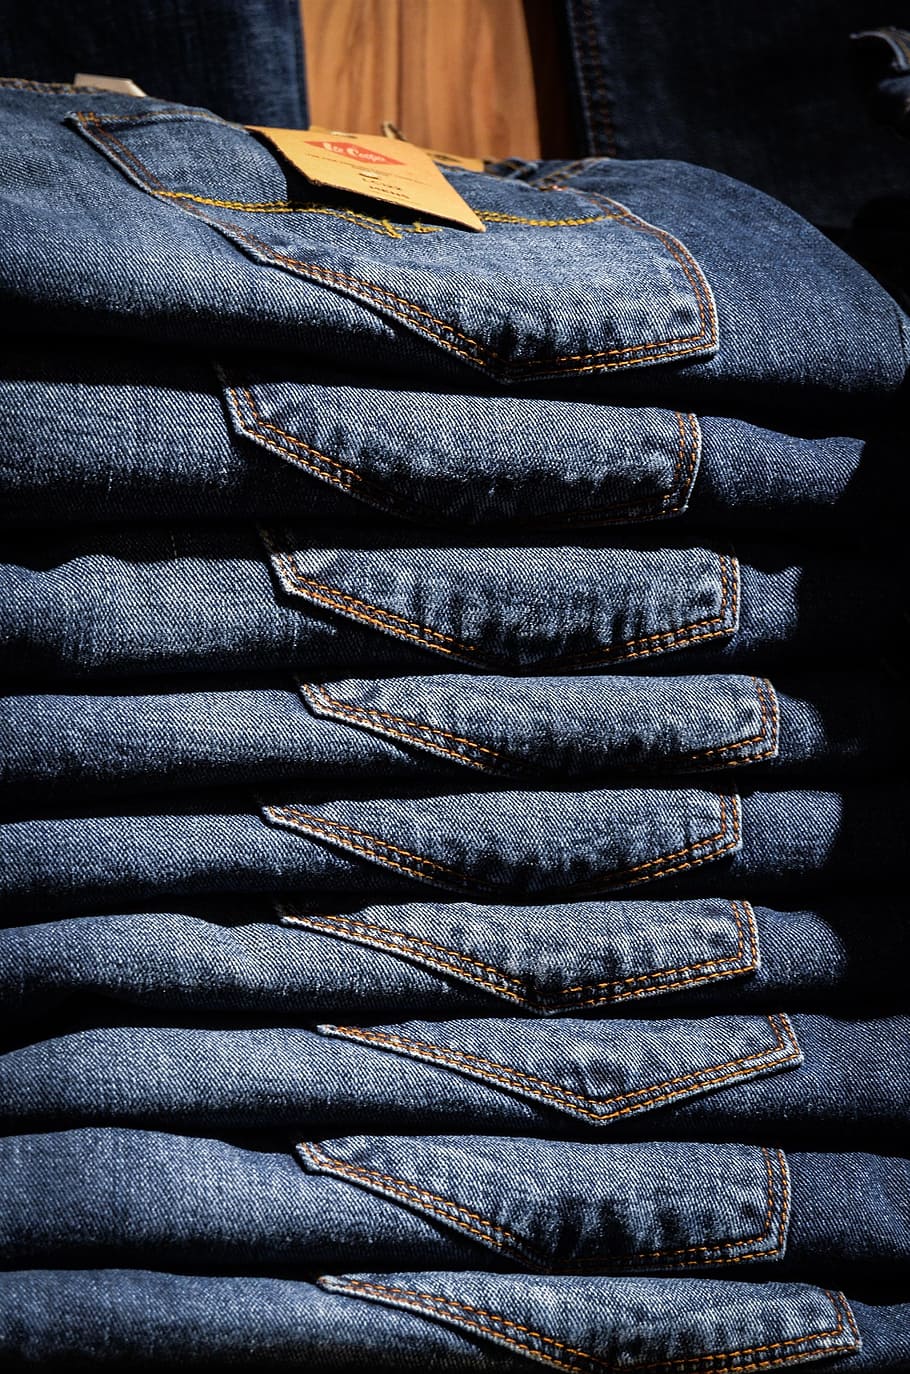 blue denim pant lot, jeans, pants, shop, shopping, shelf, exhibition, HD wallpaper